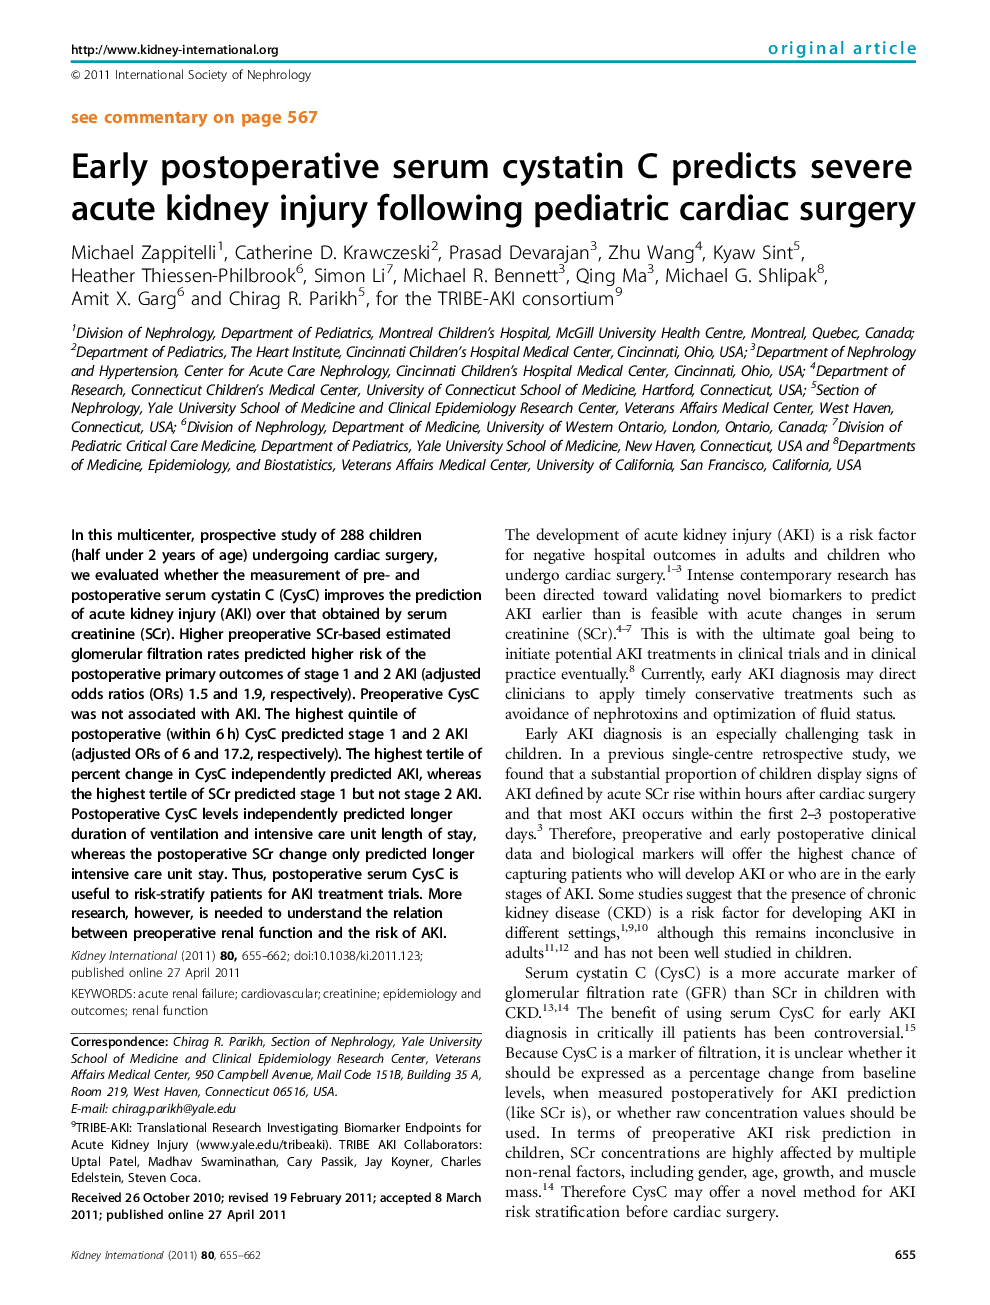 Early postoperative serum cystatin C predicts severe acute kidney injury following pediatric cardiac surgery 